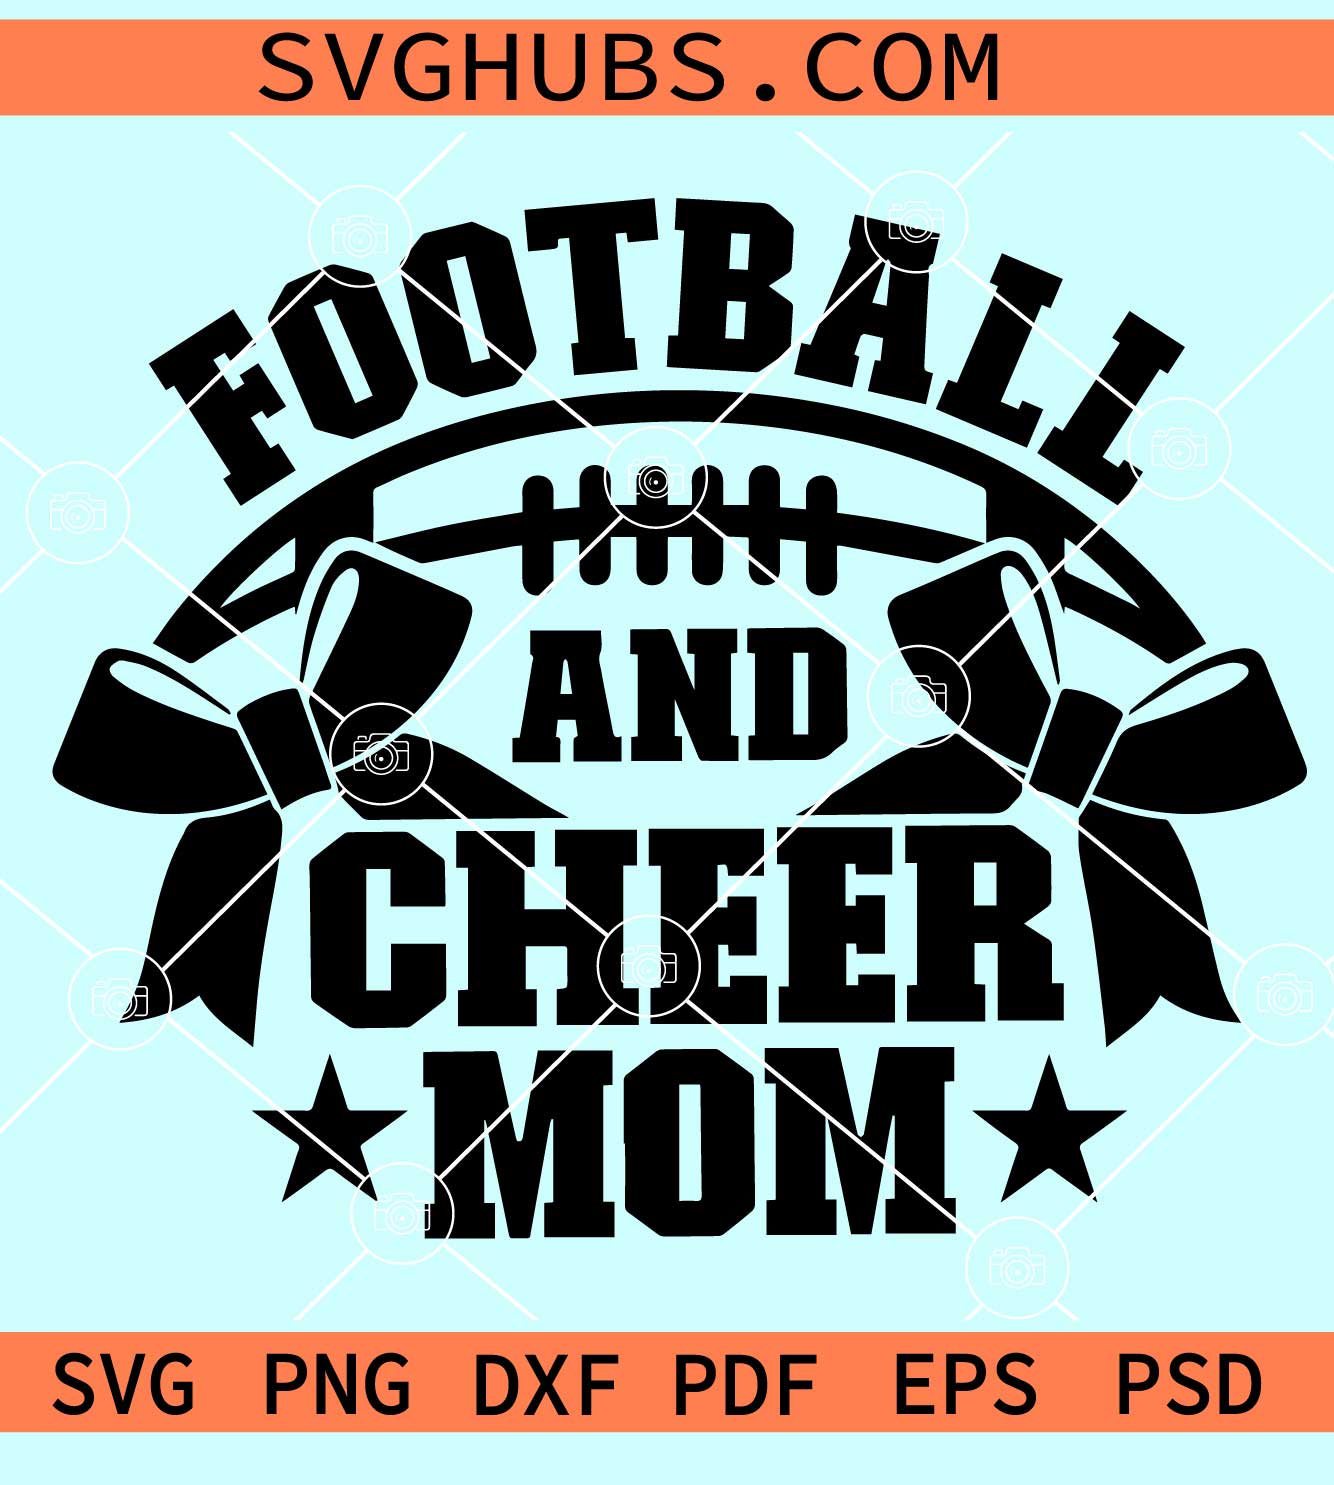 Football and cheer mom SVG